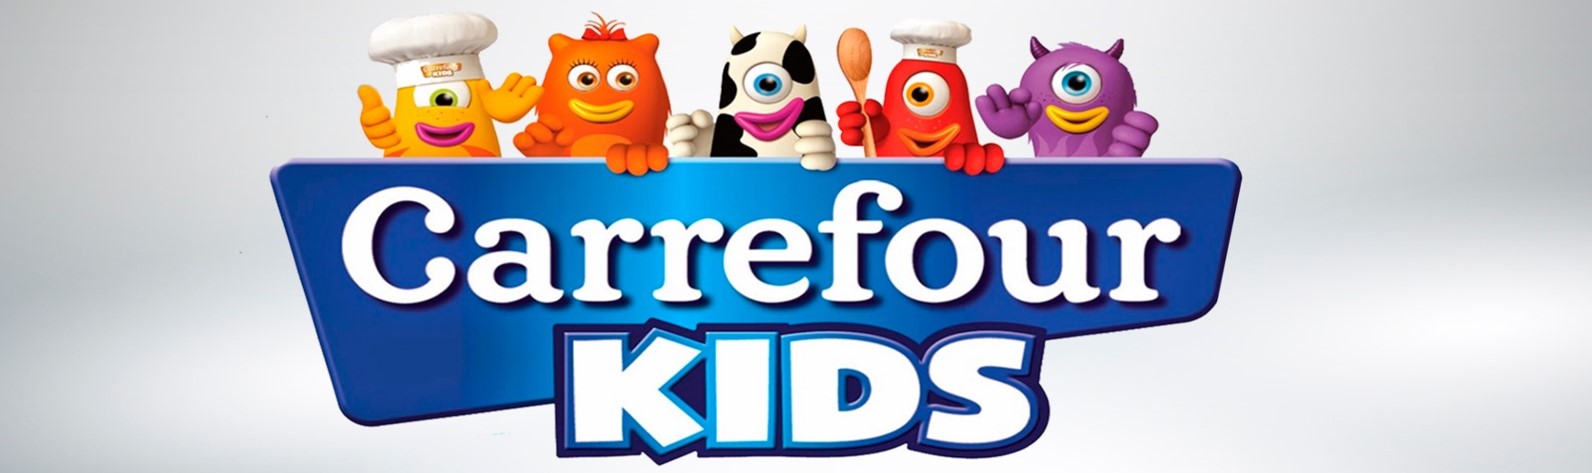 Carrefour KIDS